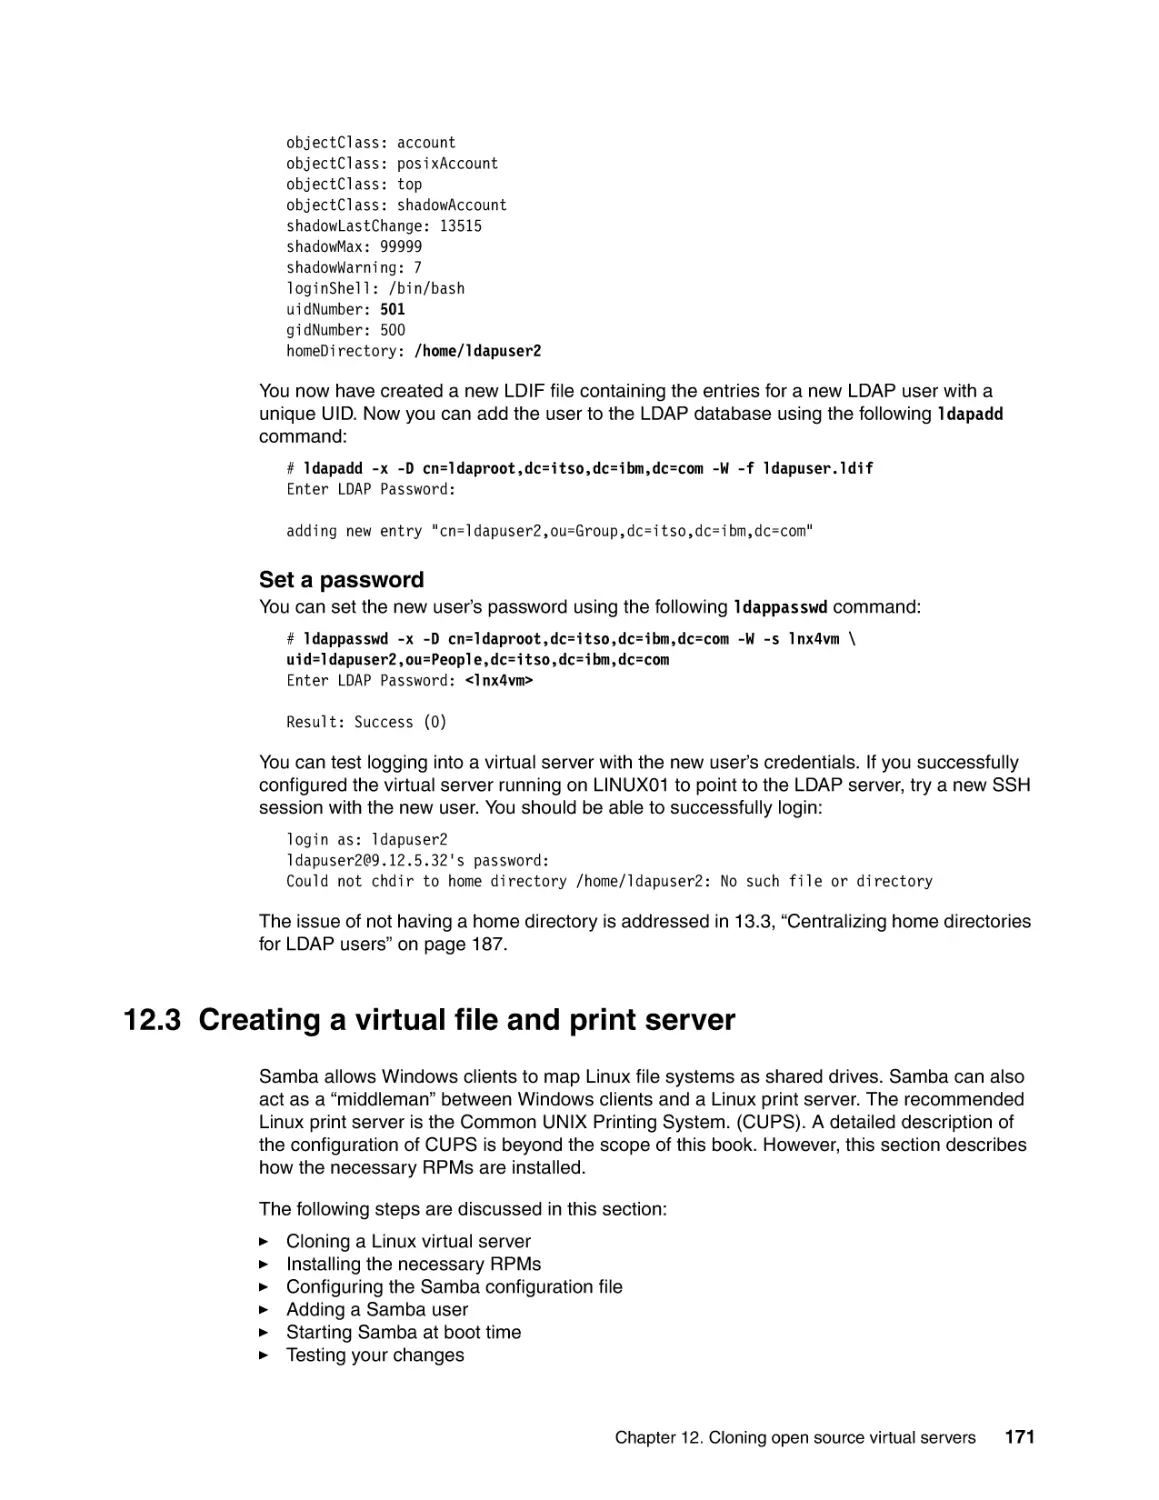 12.3 Creating a virtual file and print server